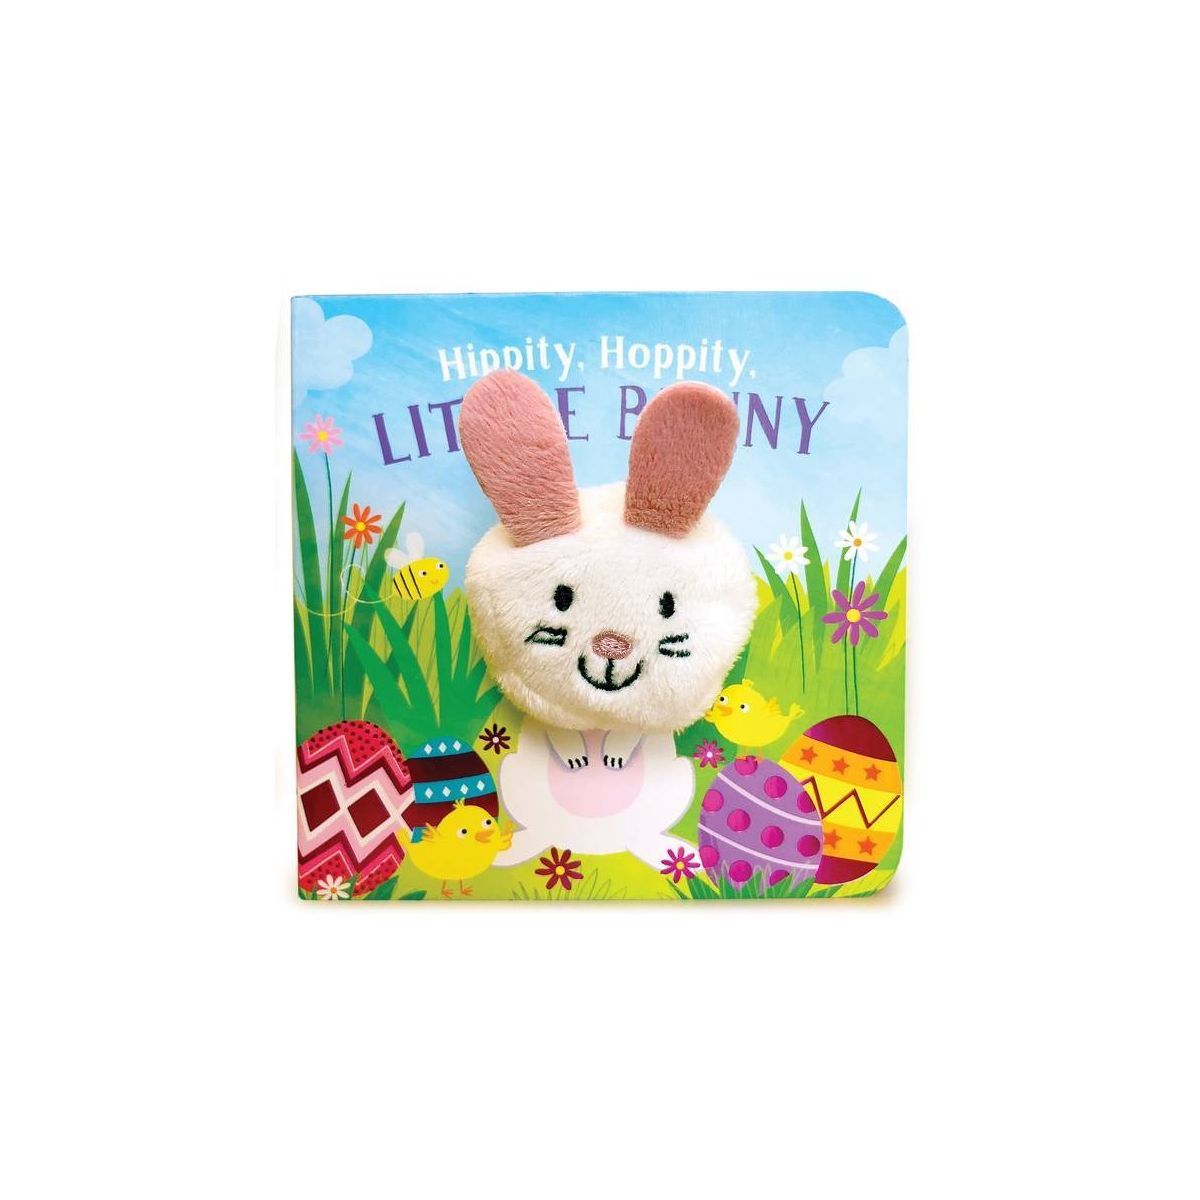 Hippity, Hoppity, Little Bunny Finger Puppet Book - by Ginger Swift (Hardcover) | Target